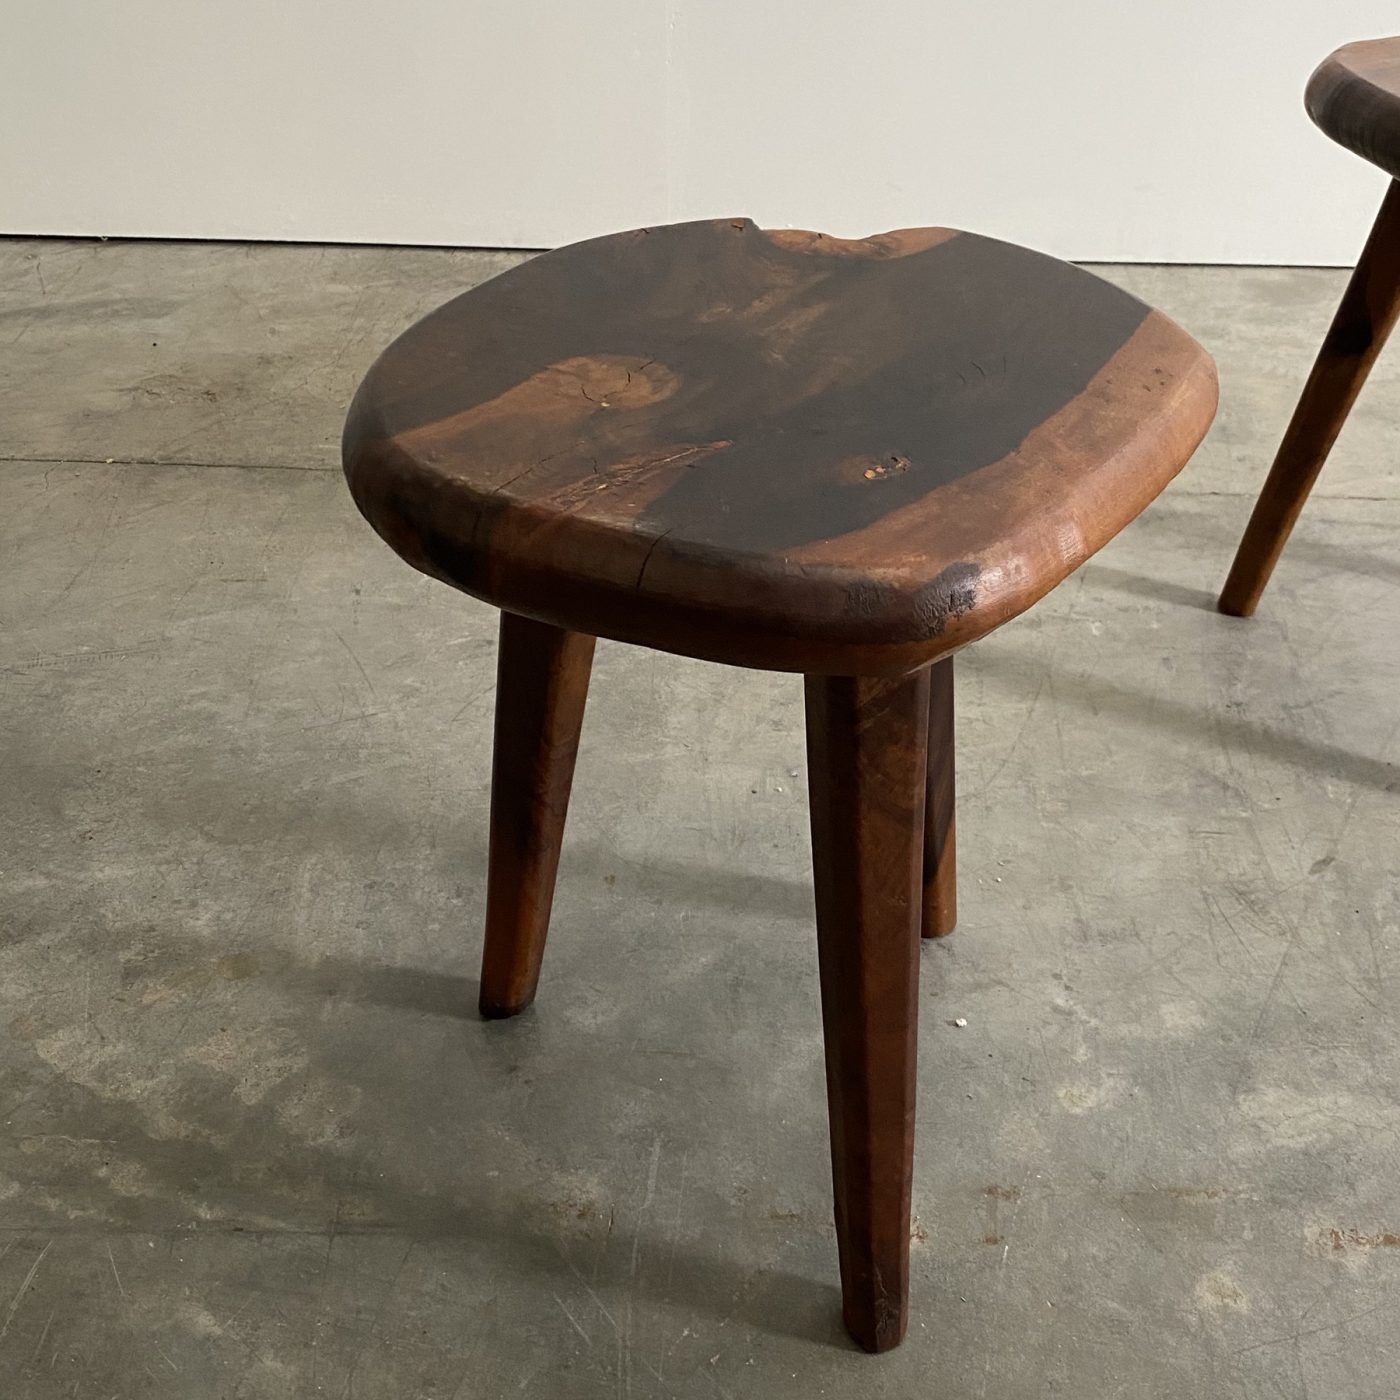 objet-vagabond-olive-stools0005